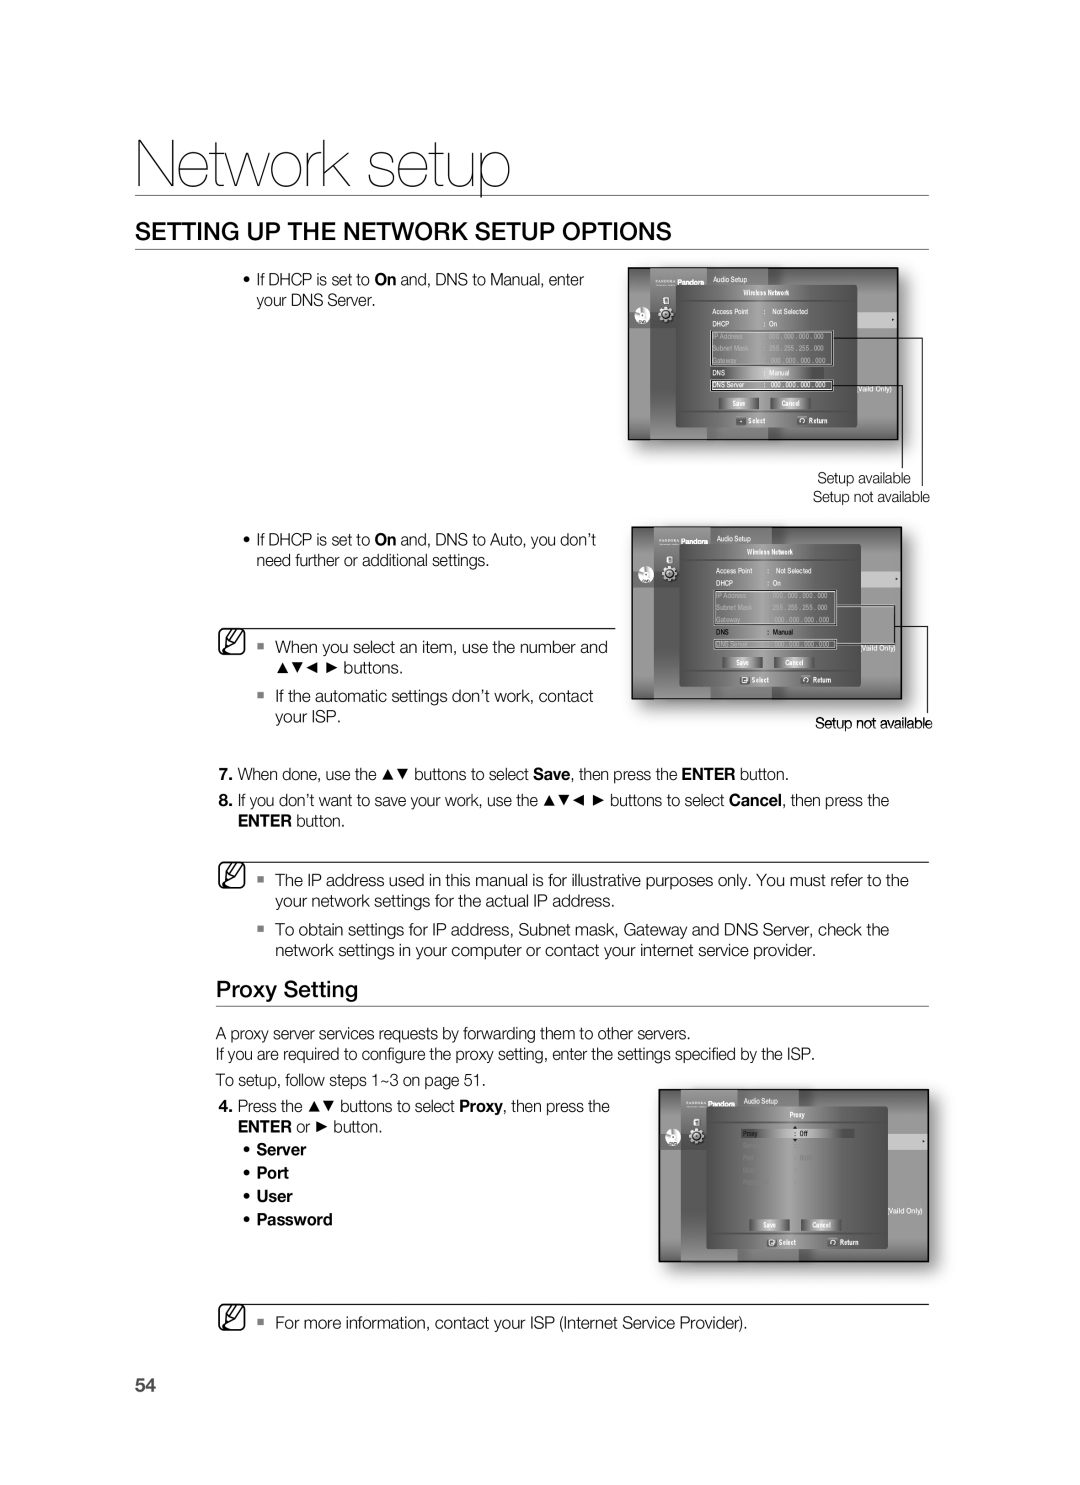 Samsung AH68-02178Z Proxy Setting, Network setup, Setting Up The Network Setup Options, Server Port User Password 